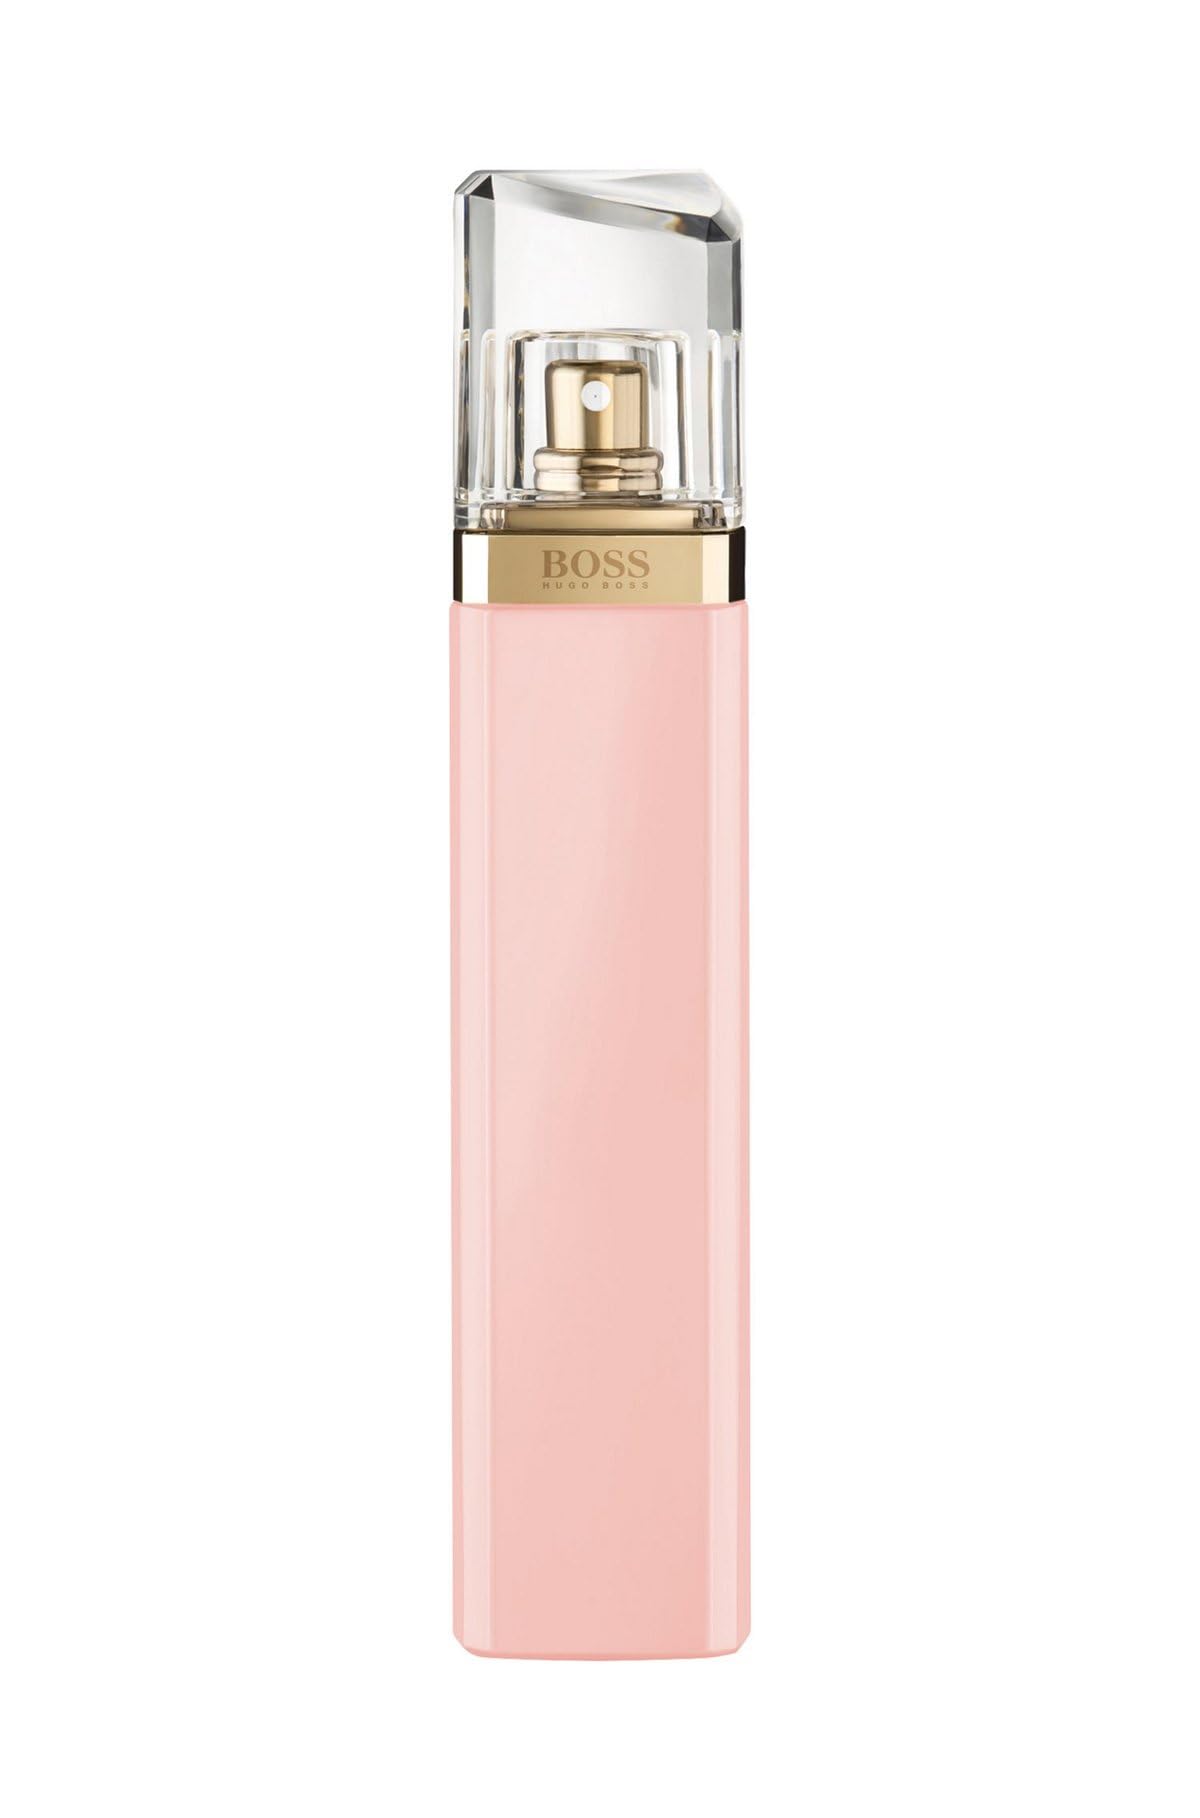 Hugo Boss Ma Vie pour Femme - Eau de Perfume For Women, 75 ml